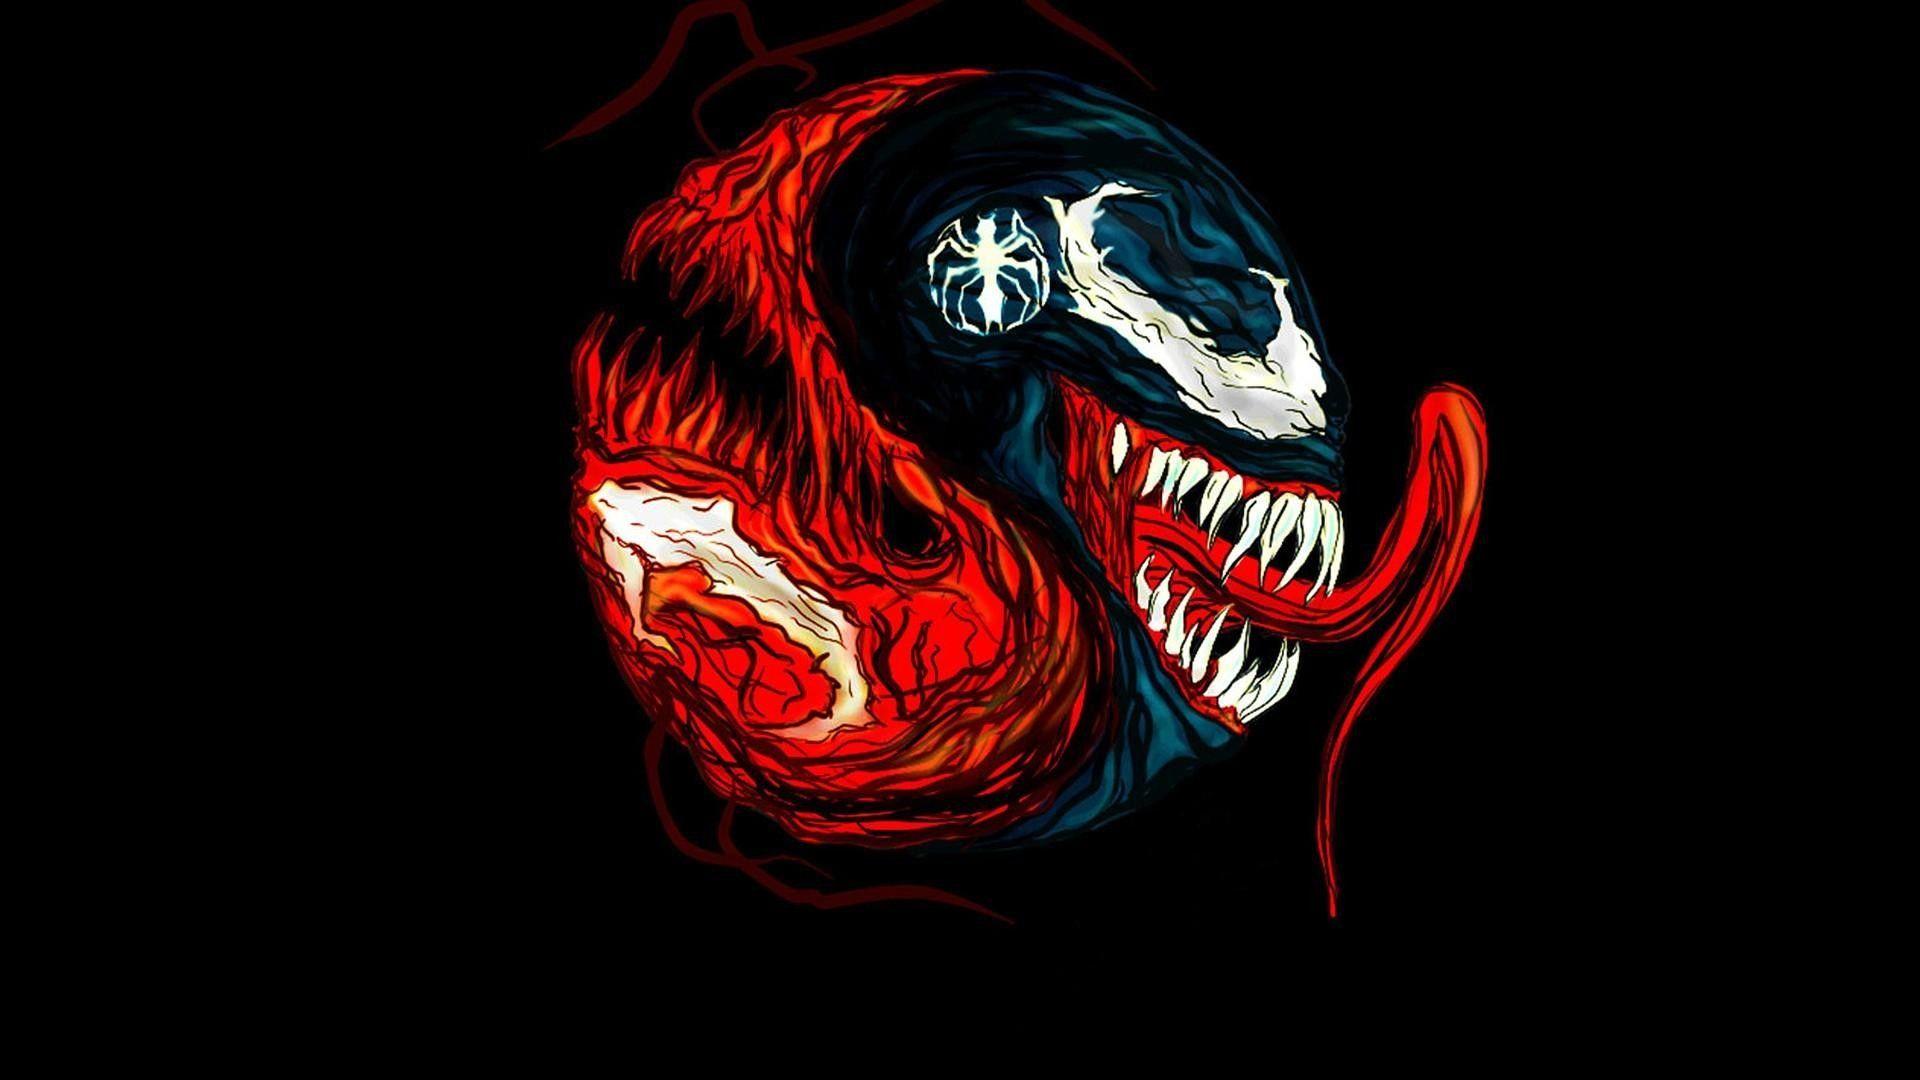 Venom & Carnage Image. Beautiful image HD Picture & Desktop